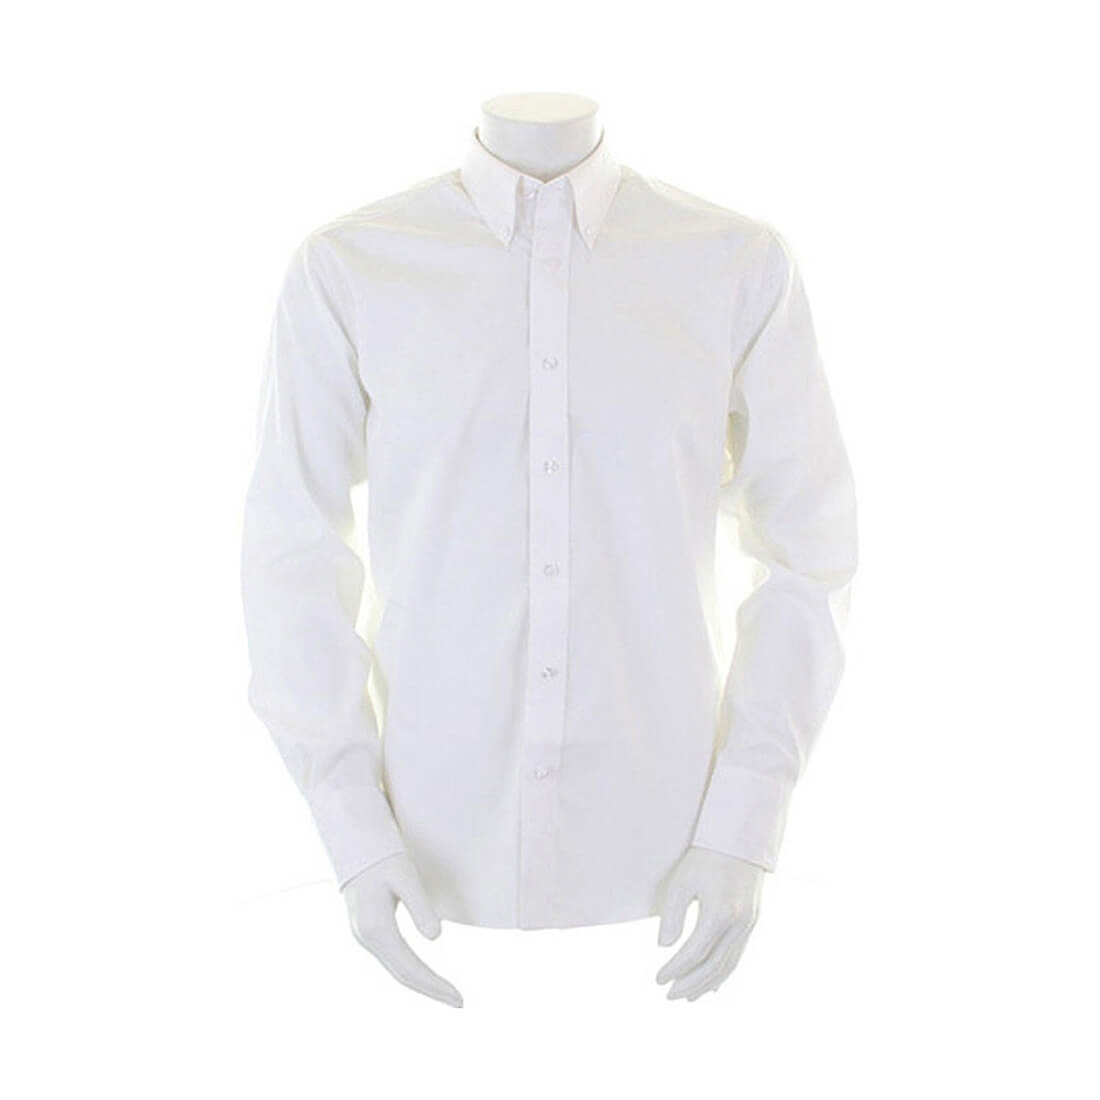 Camisa Oxford Premium ajustada manga larga - Ropa de protección